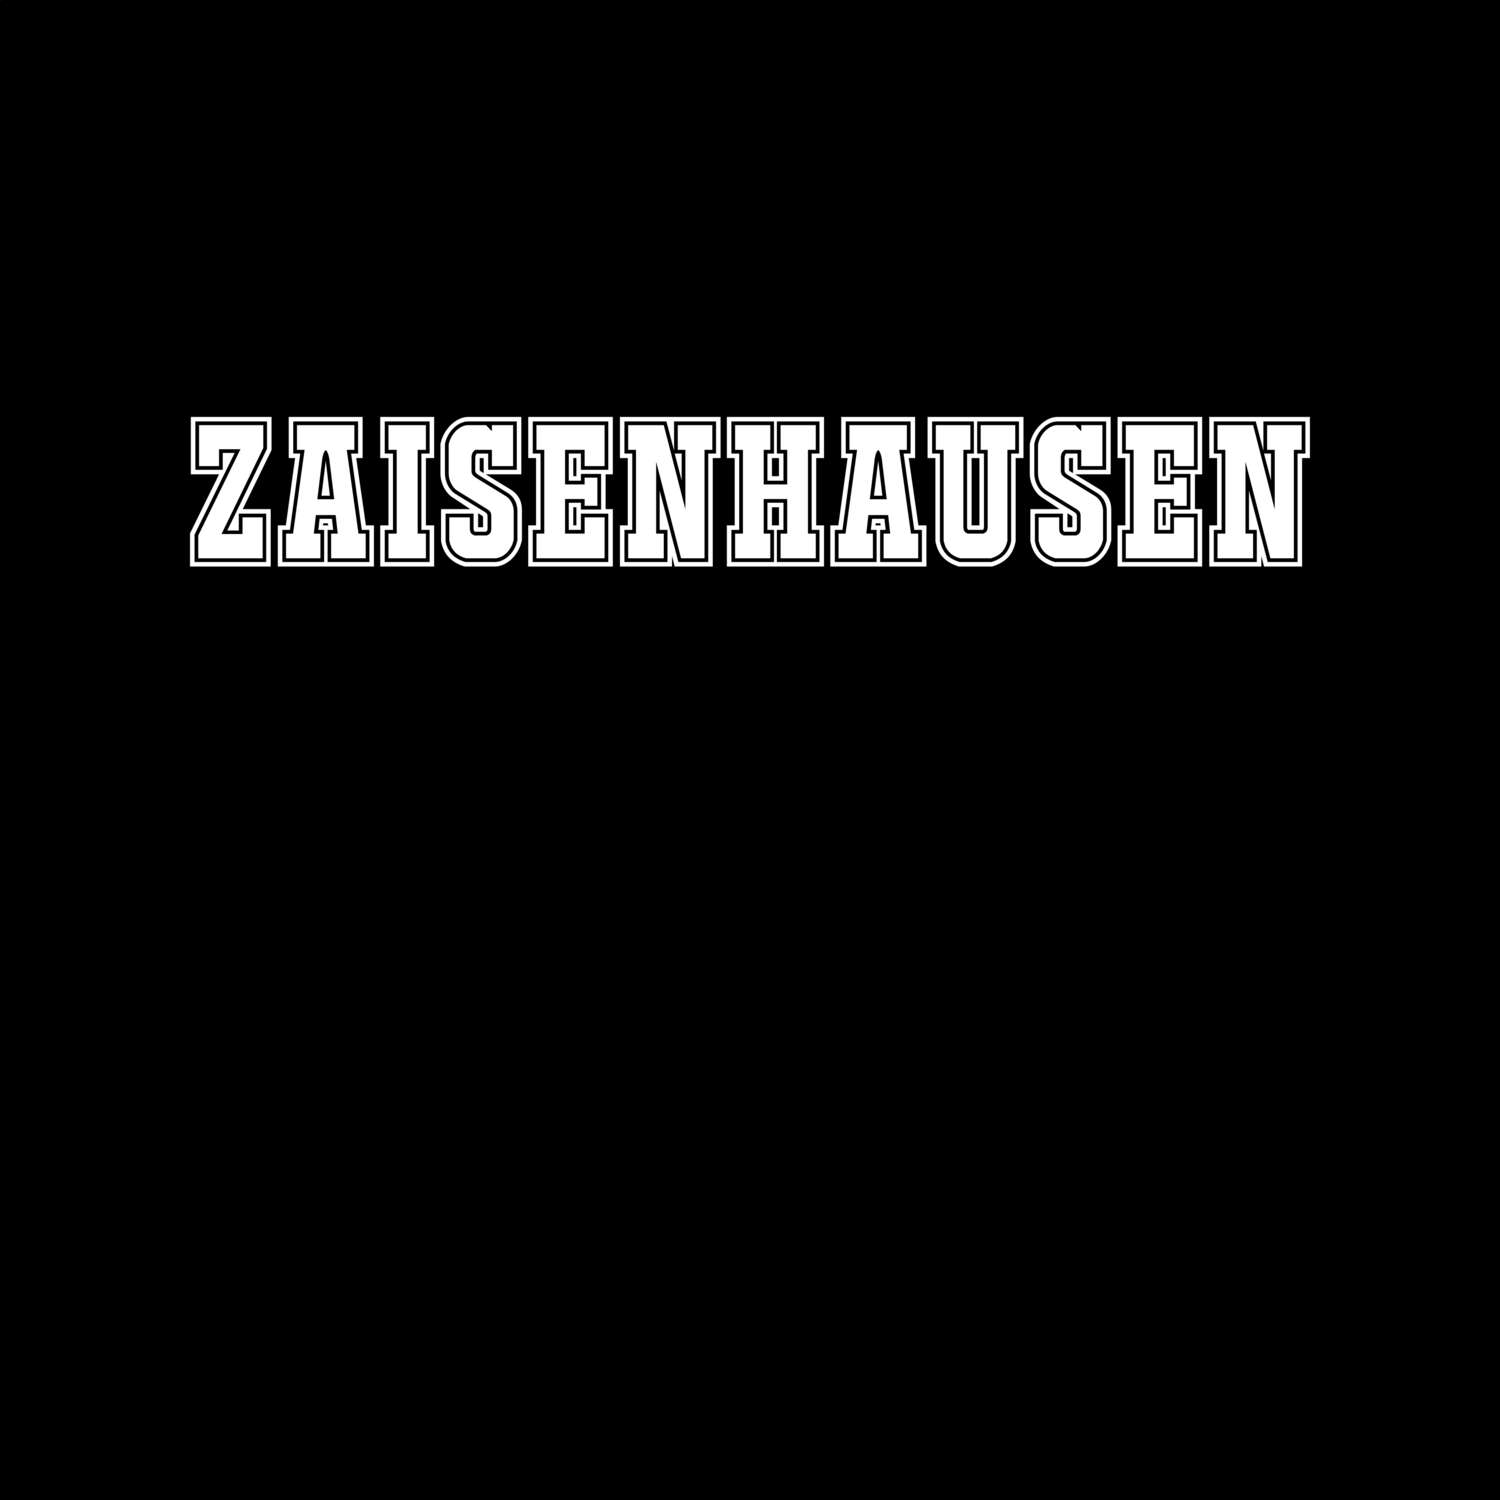 Zaisenhausen T-Shirt »Classic«